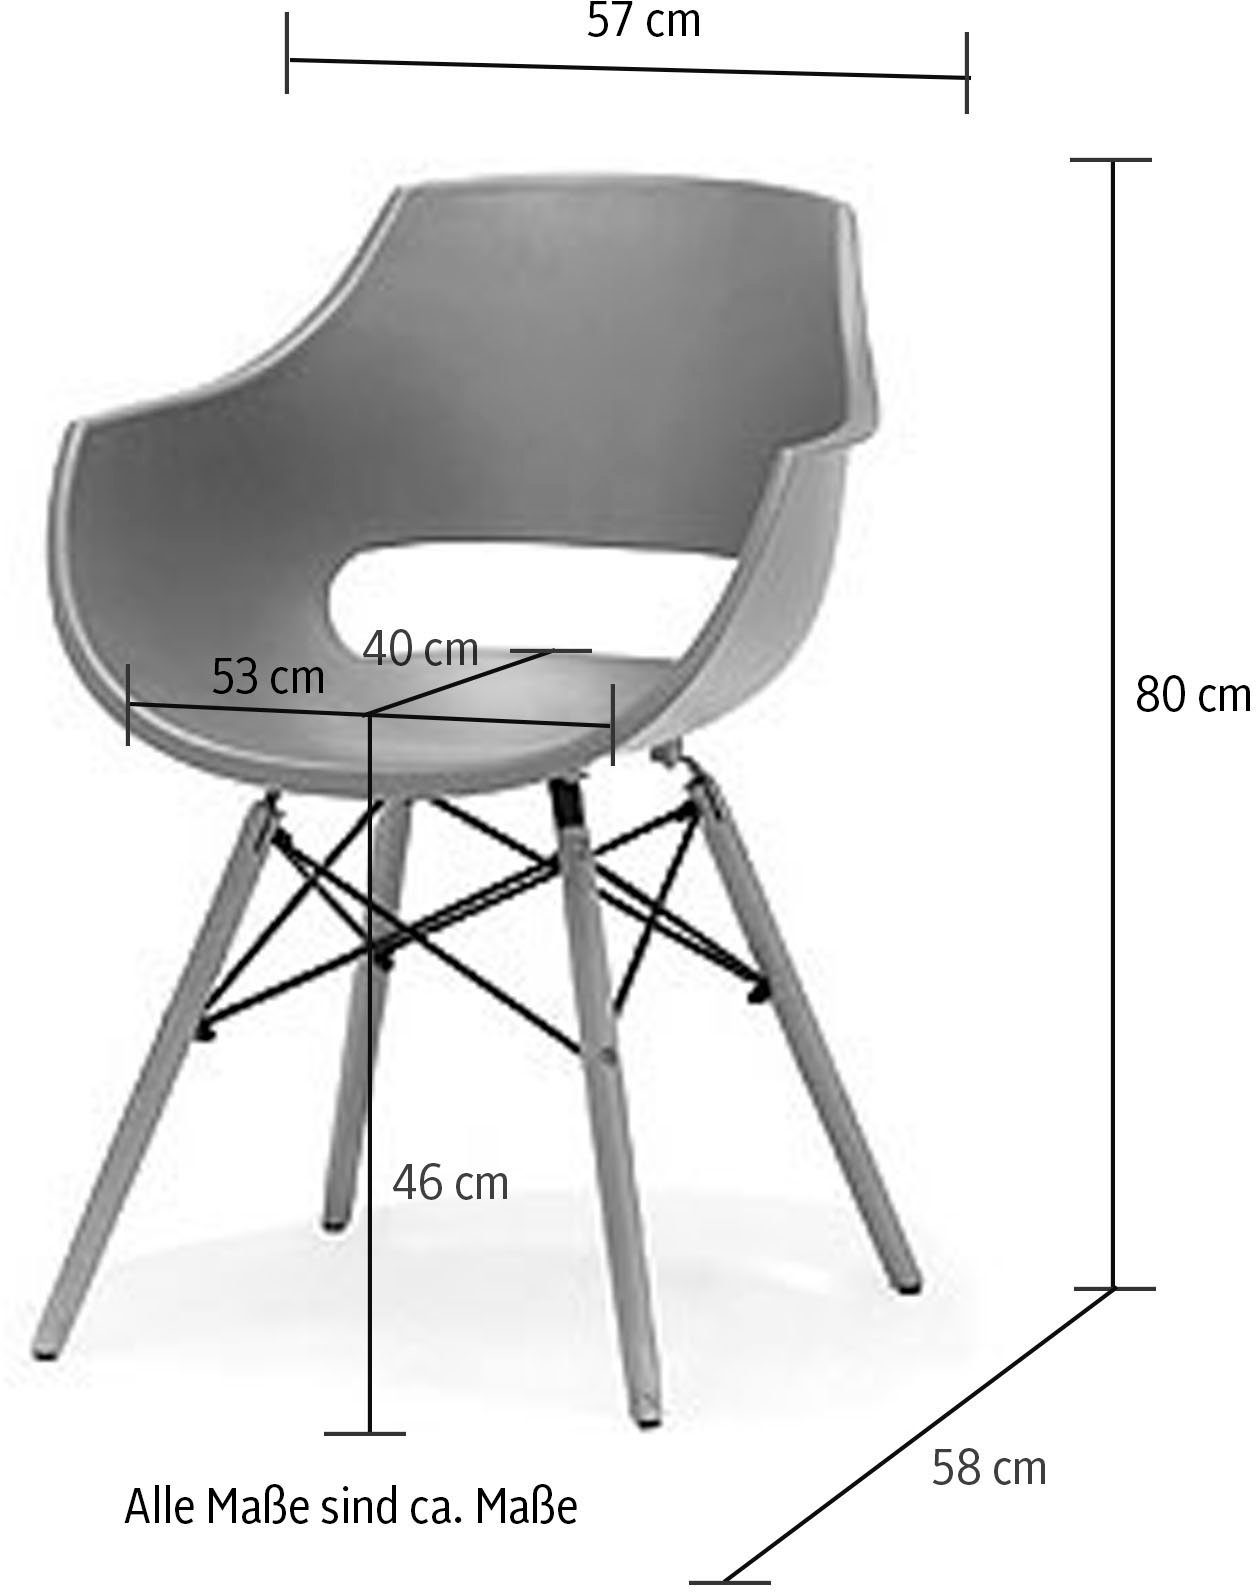 MCA | grau Esszimmerstuhl ROCKVILLE schwarz lackiert grau furniture | matt